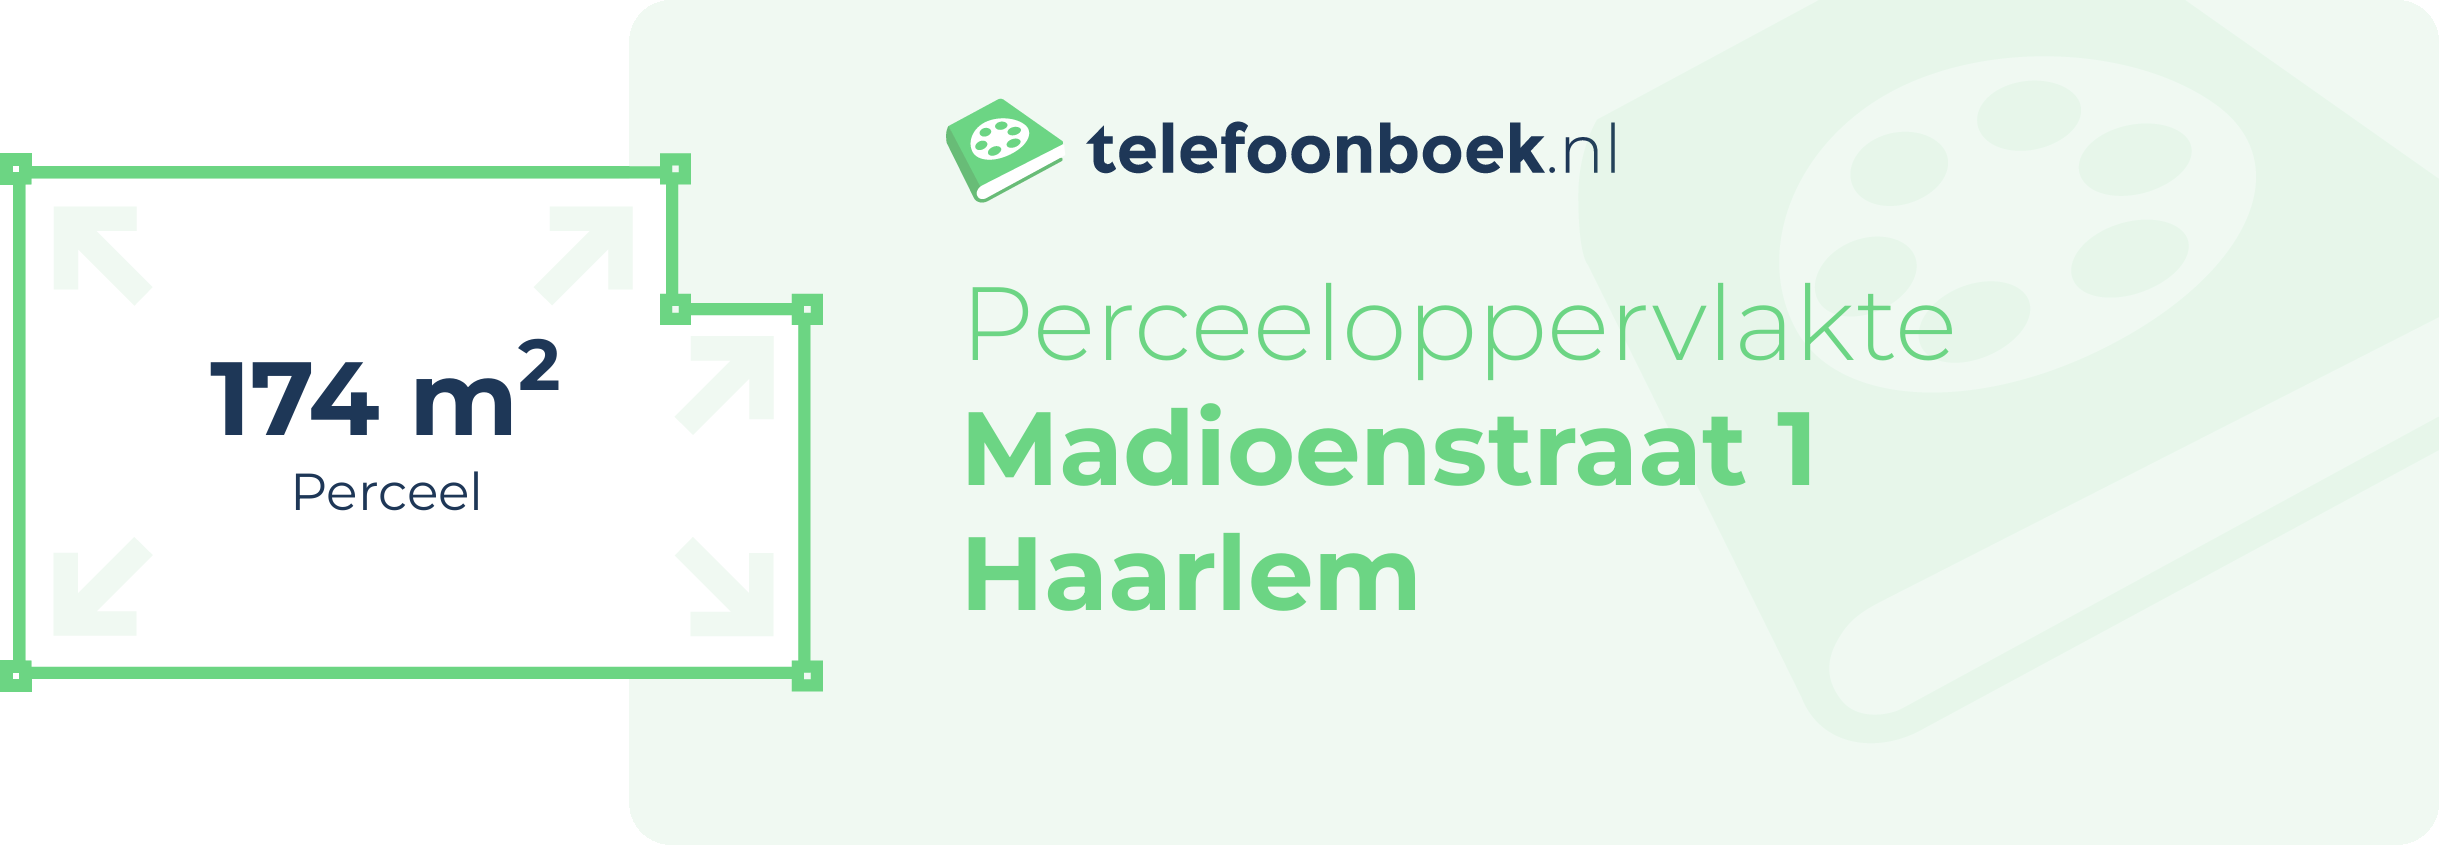 Perceeloppervlakte Madioenstraat 1 Haarlem